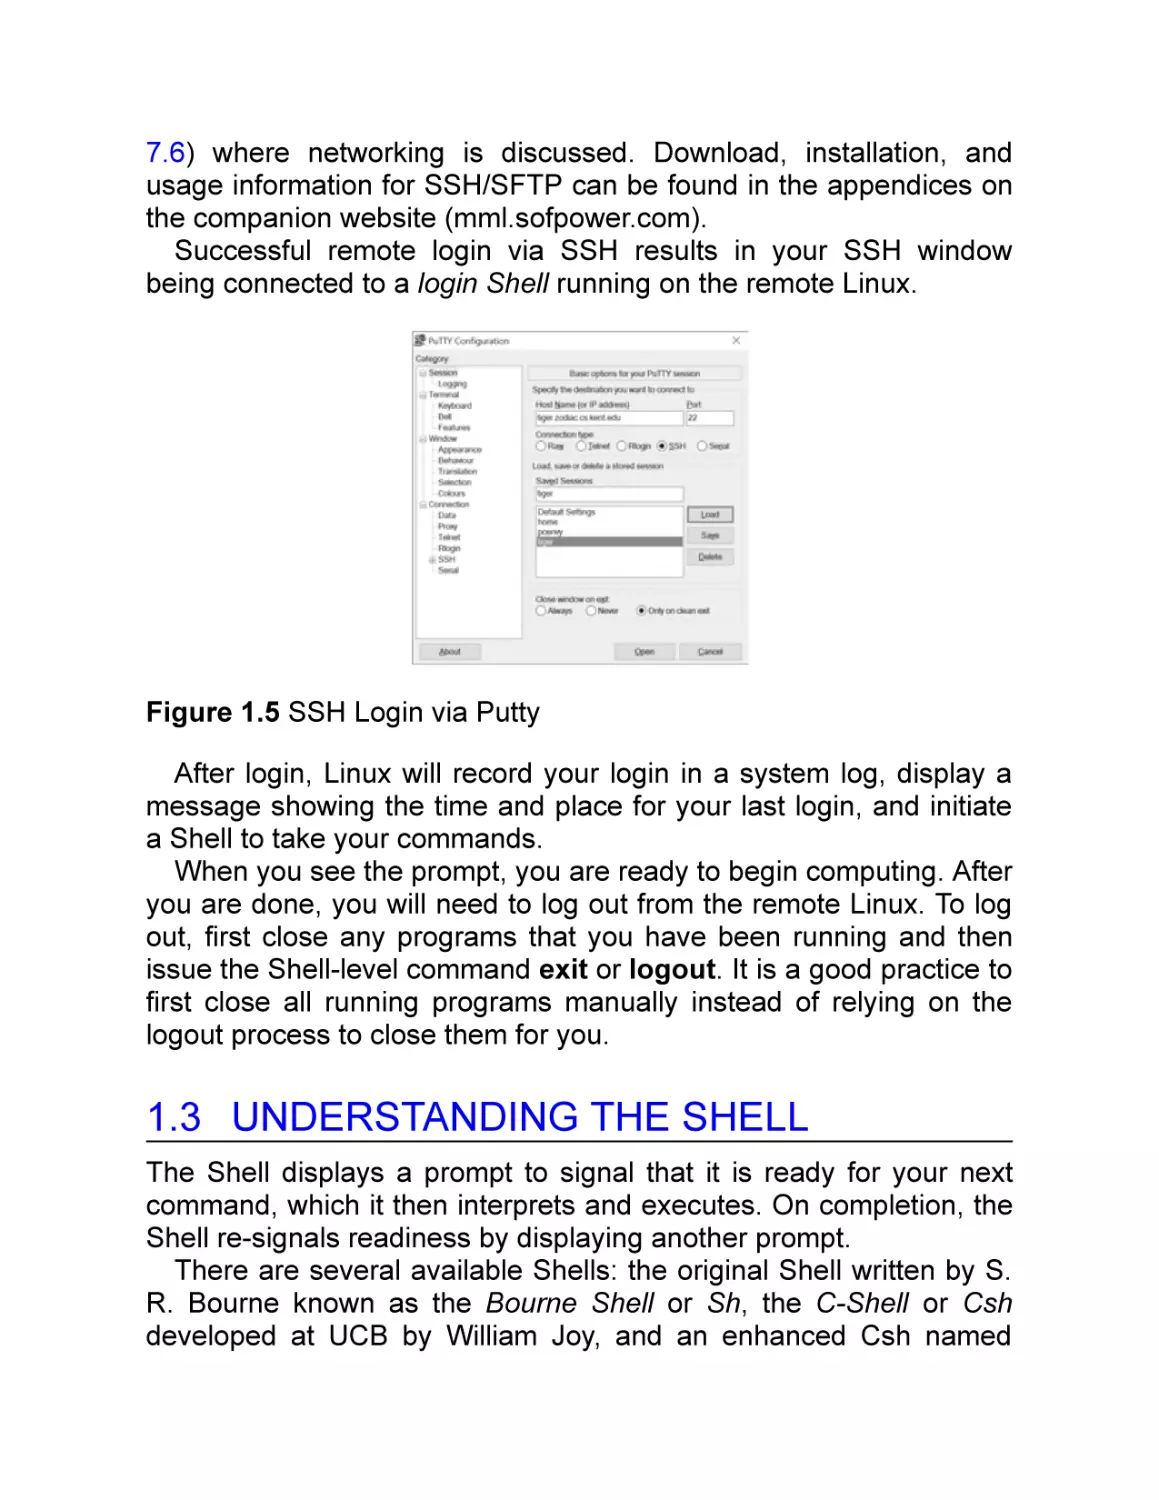 1.3 Understanding the Shell